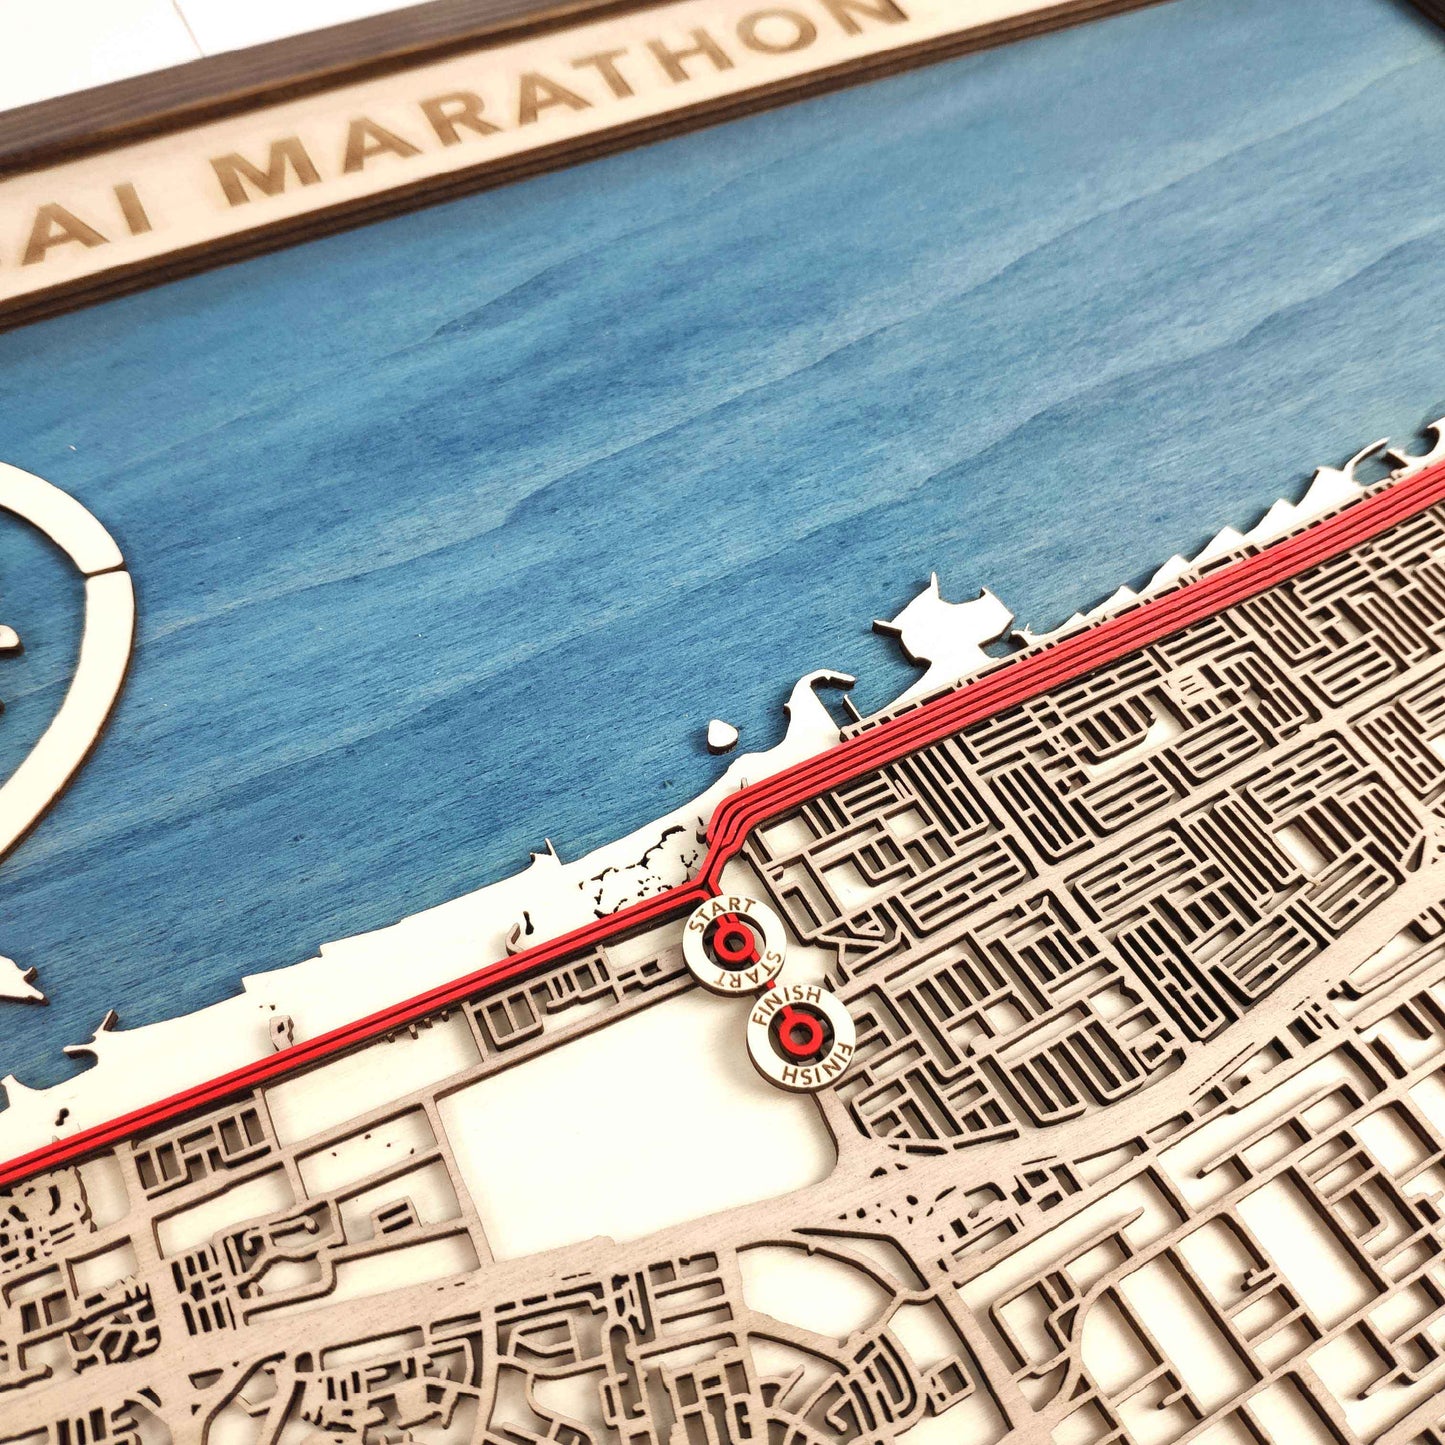 Dubai Marathon Laser-Cut Wooden Map – Unique Runner Poster Gift by CityWood - Custom Wood Map Art - Unique Laser Cut Engraved - Anniversary Gift